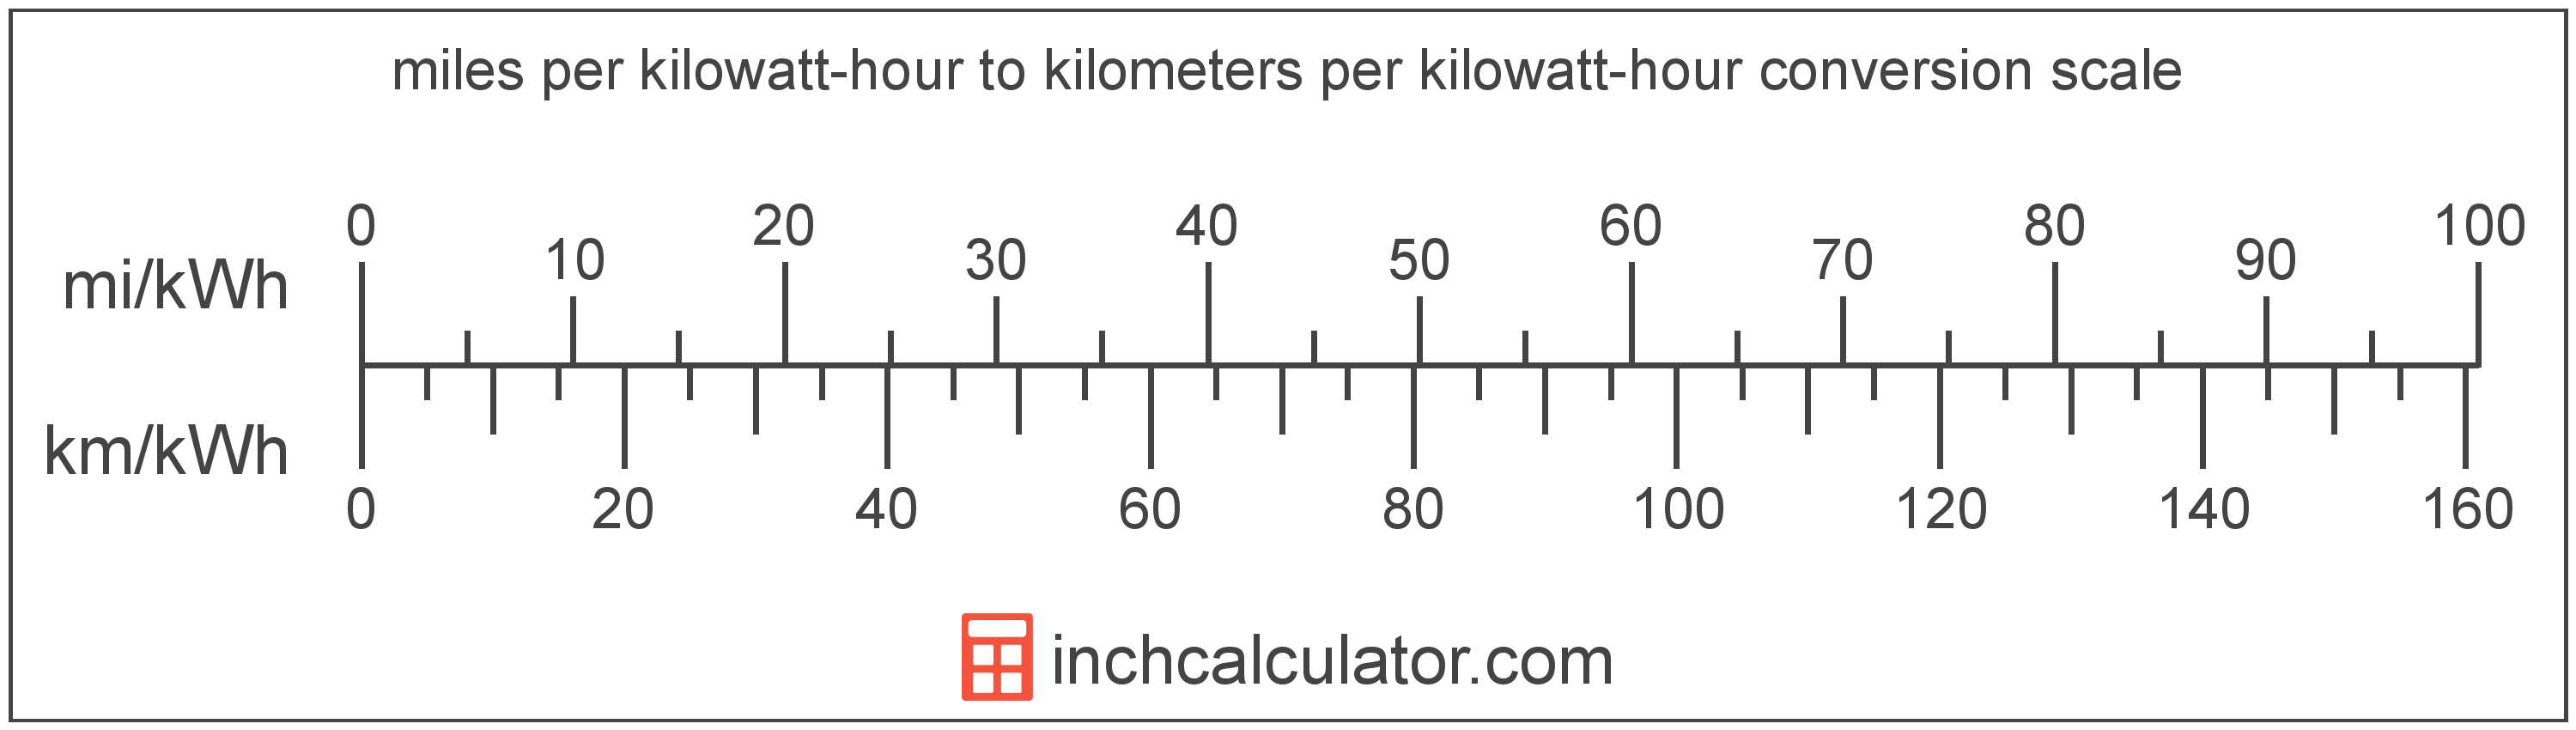 conversion scale showing miles per kilowatt-hour and equivalent kilometers per kilowatt-hour electric car efficiency values